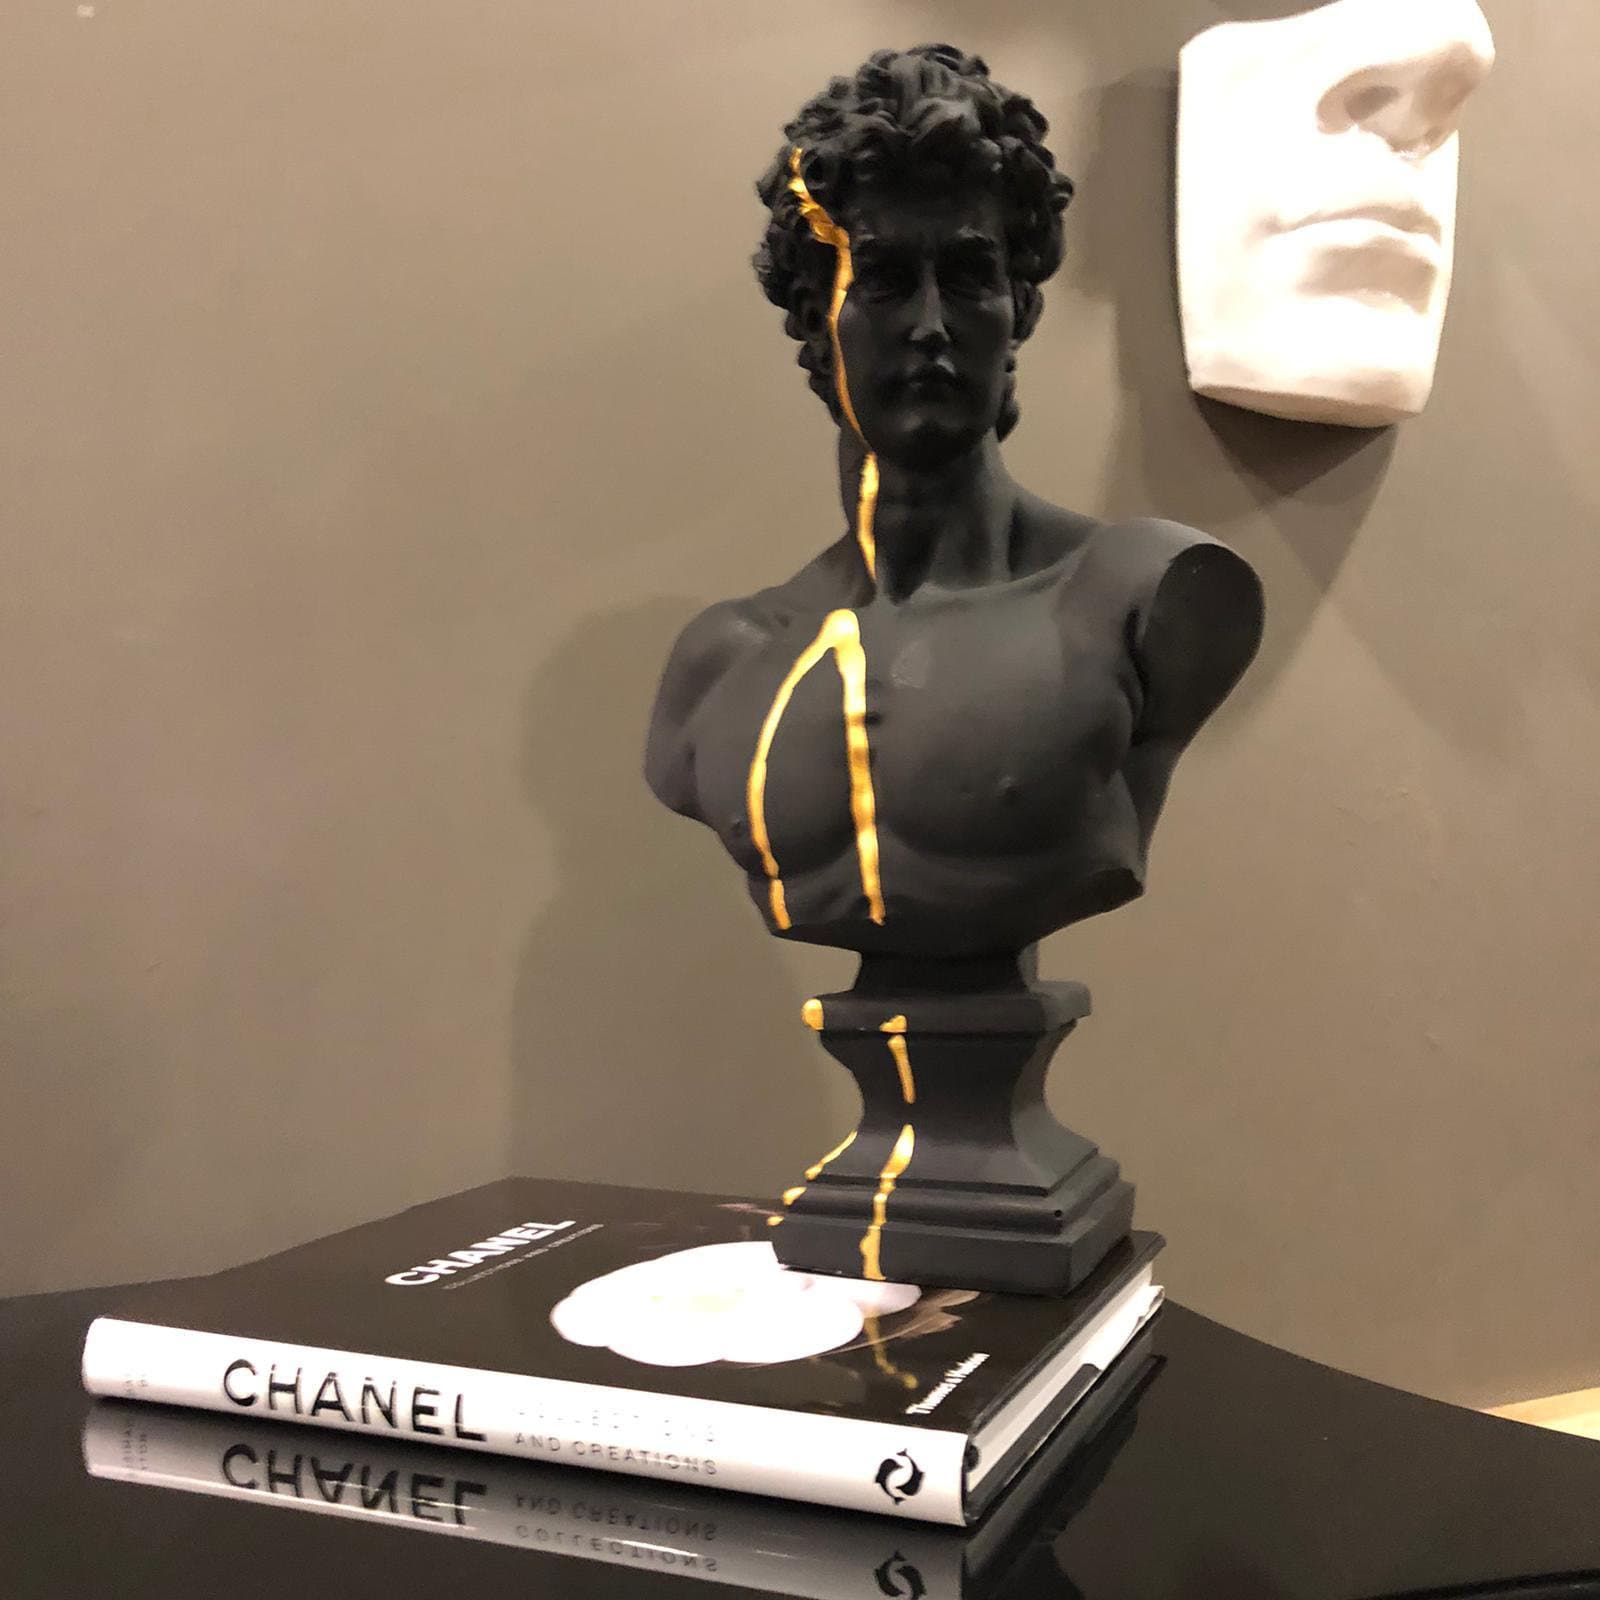 Elegant Contrast: Large David Bust Sculpture with Gold Strip